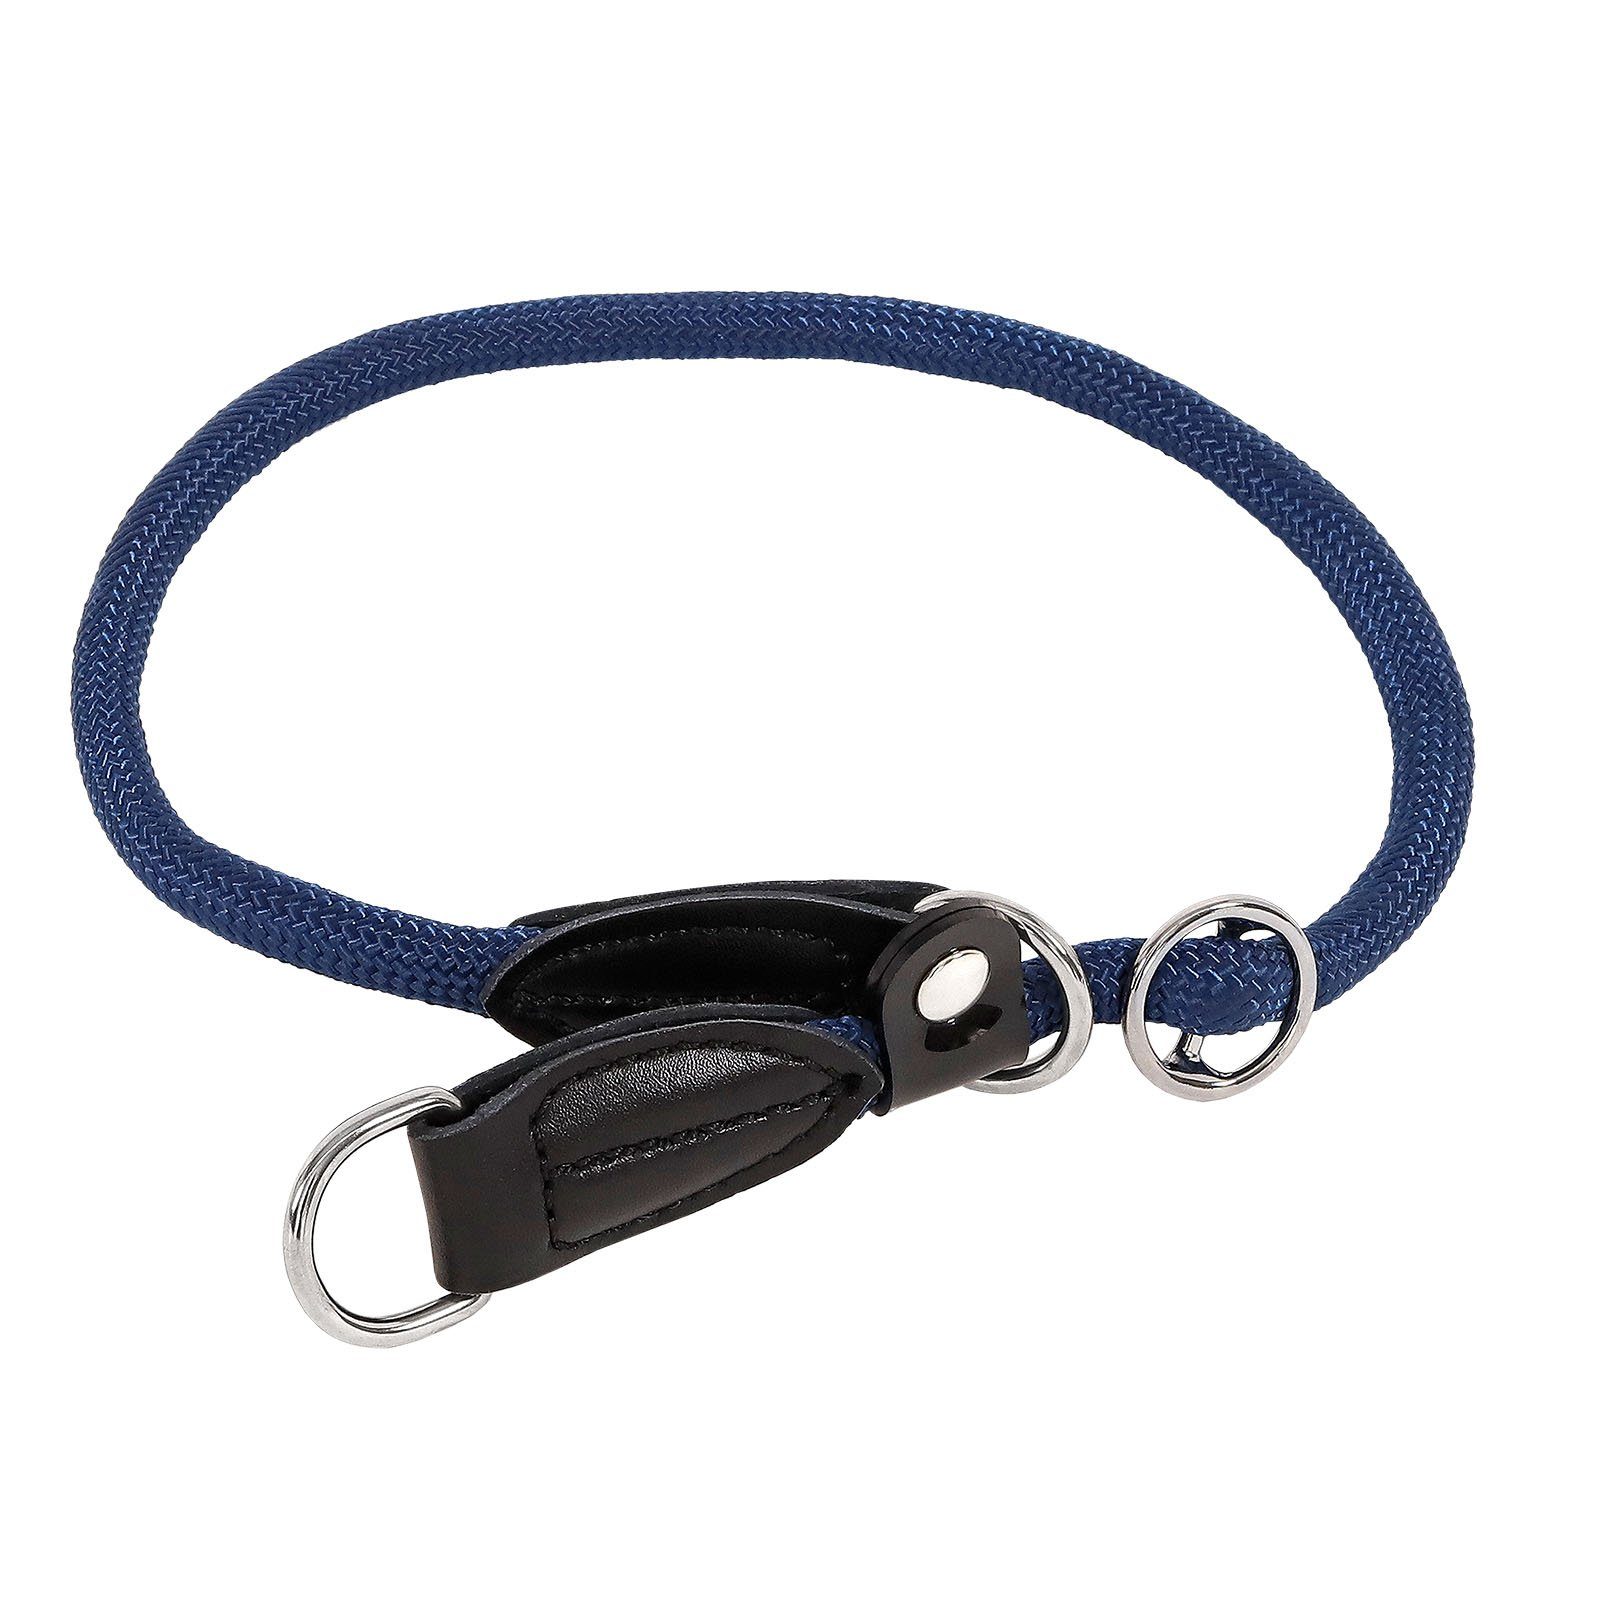 lionto Hunde-Halsband Hundehalsband mit Zugstopp, Retrieverhalsband, 55 cm, dunkelblau